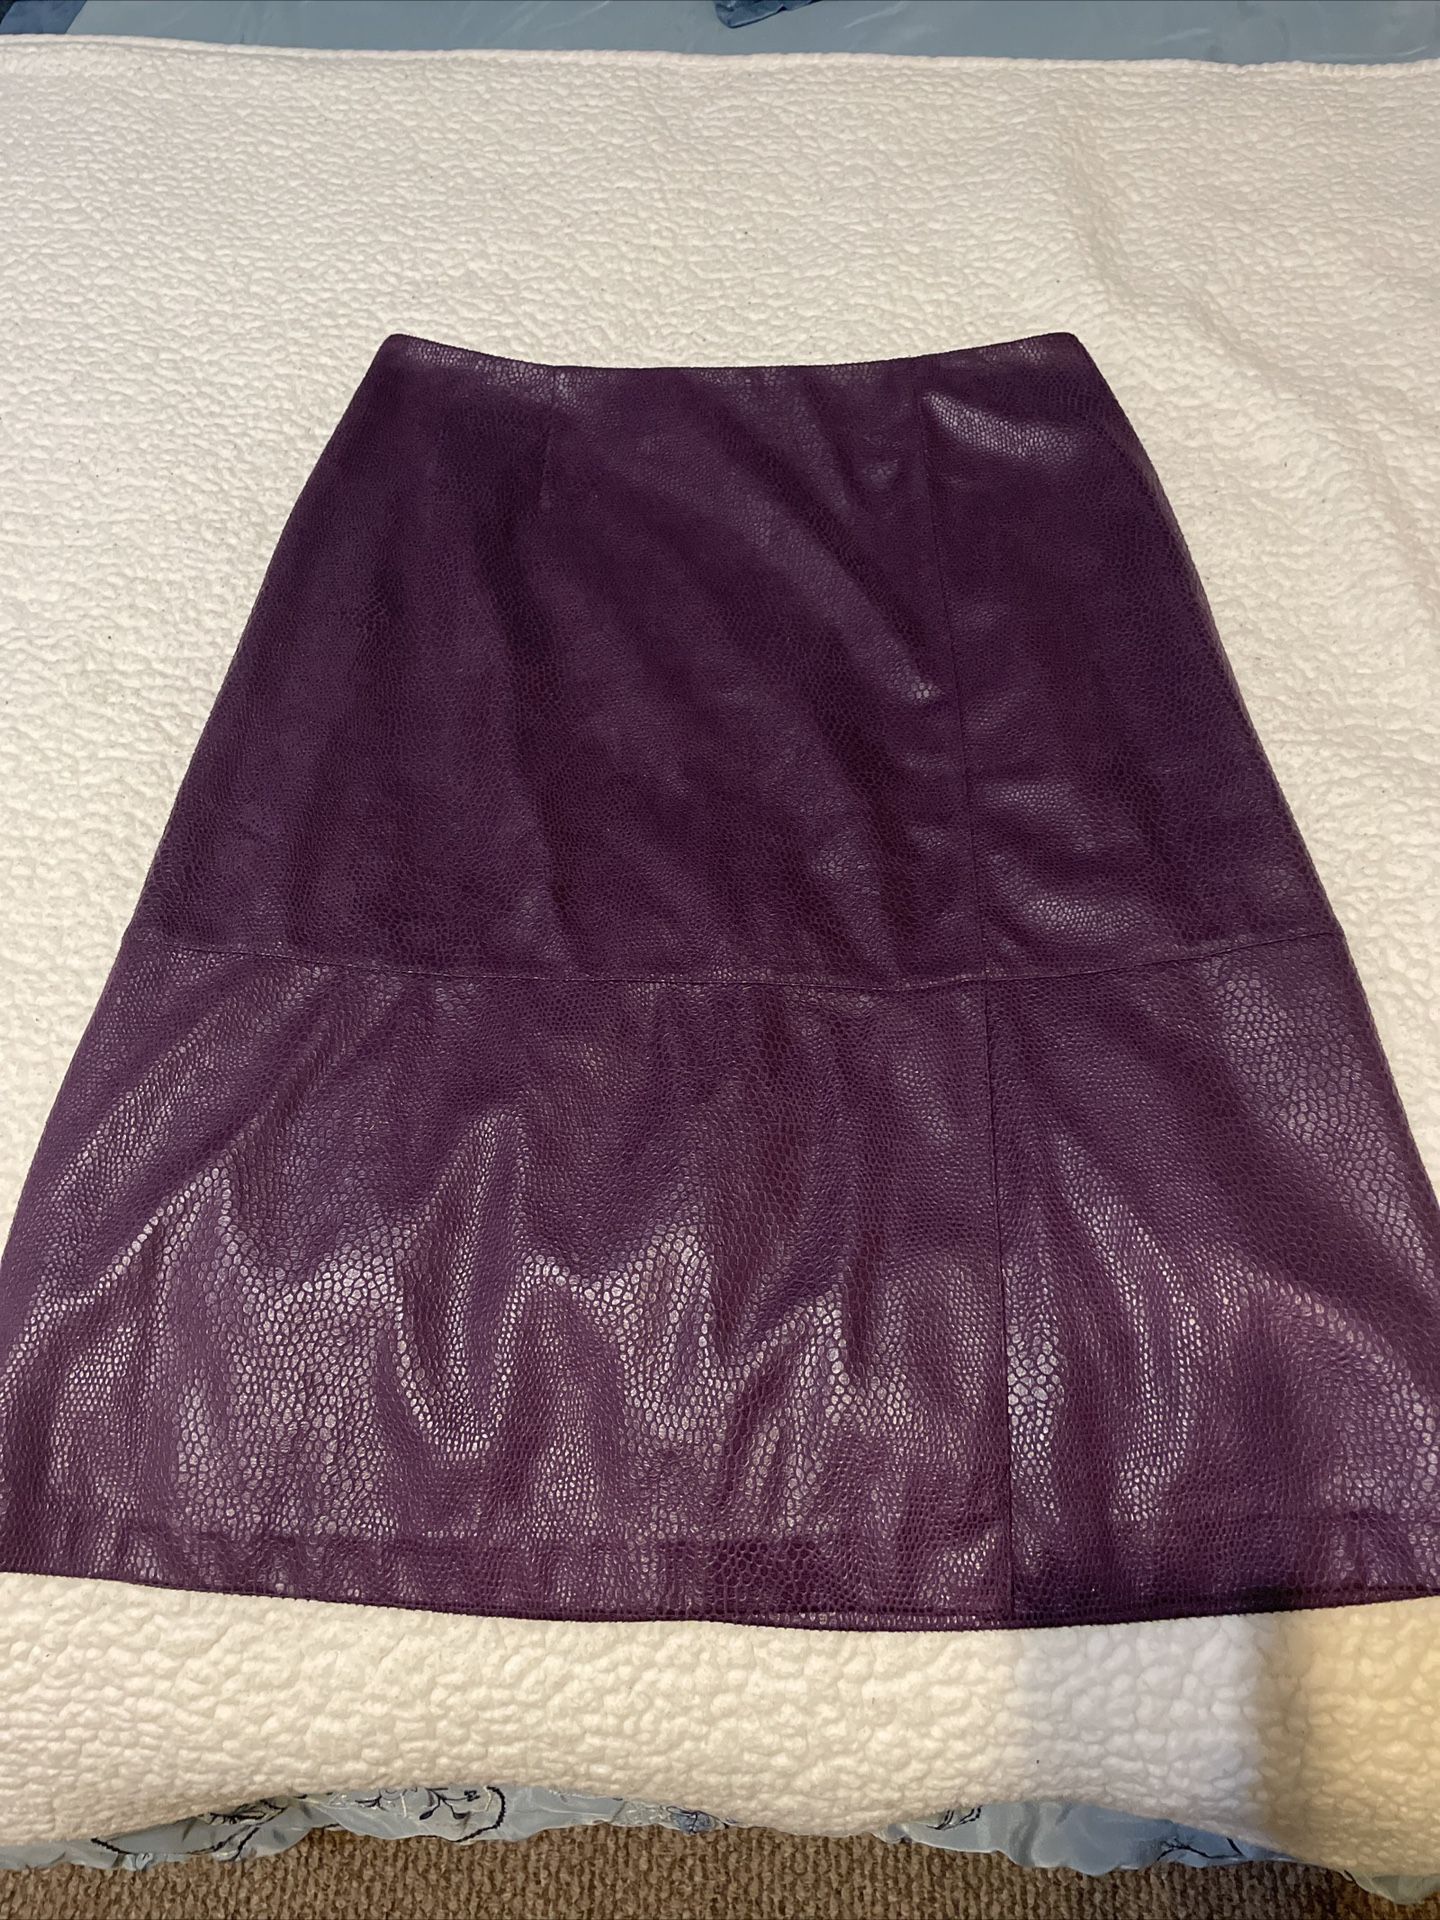 Ruby Rd 10p Purple Snakeskin Pattern Skirt